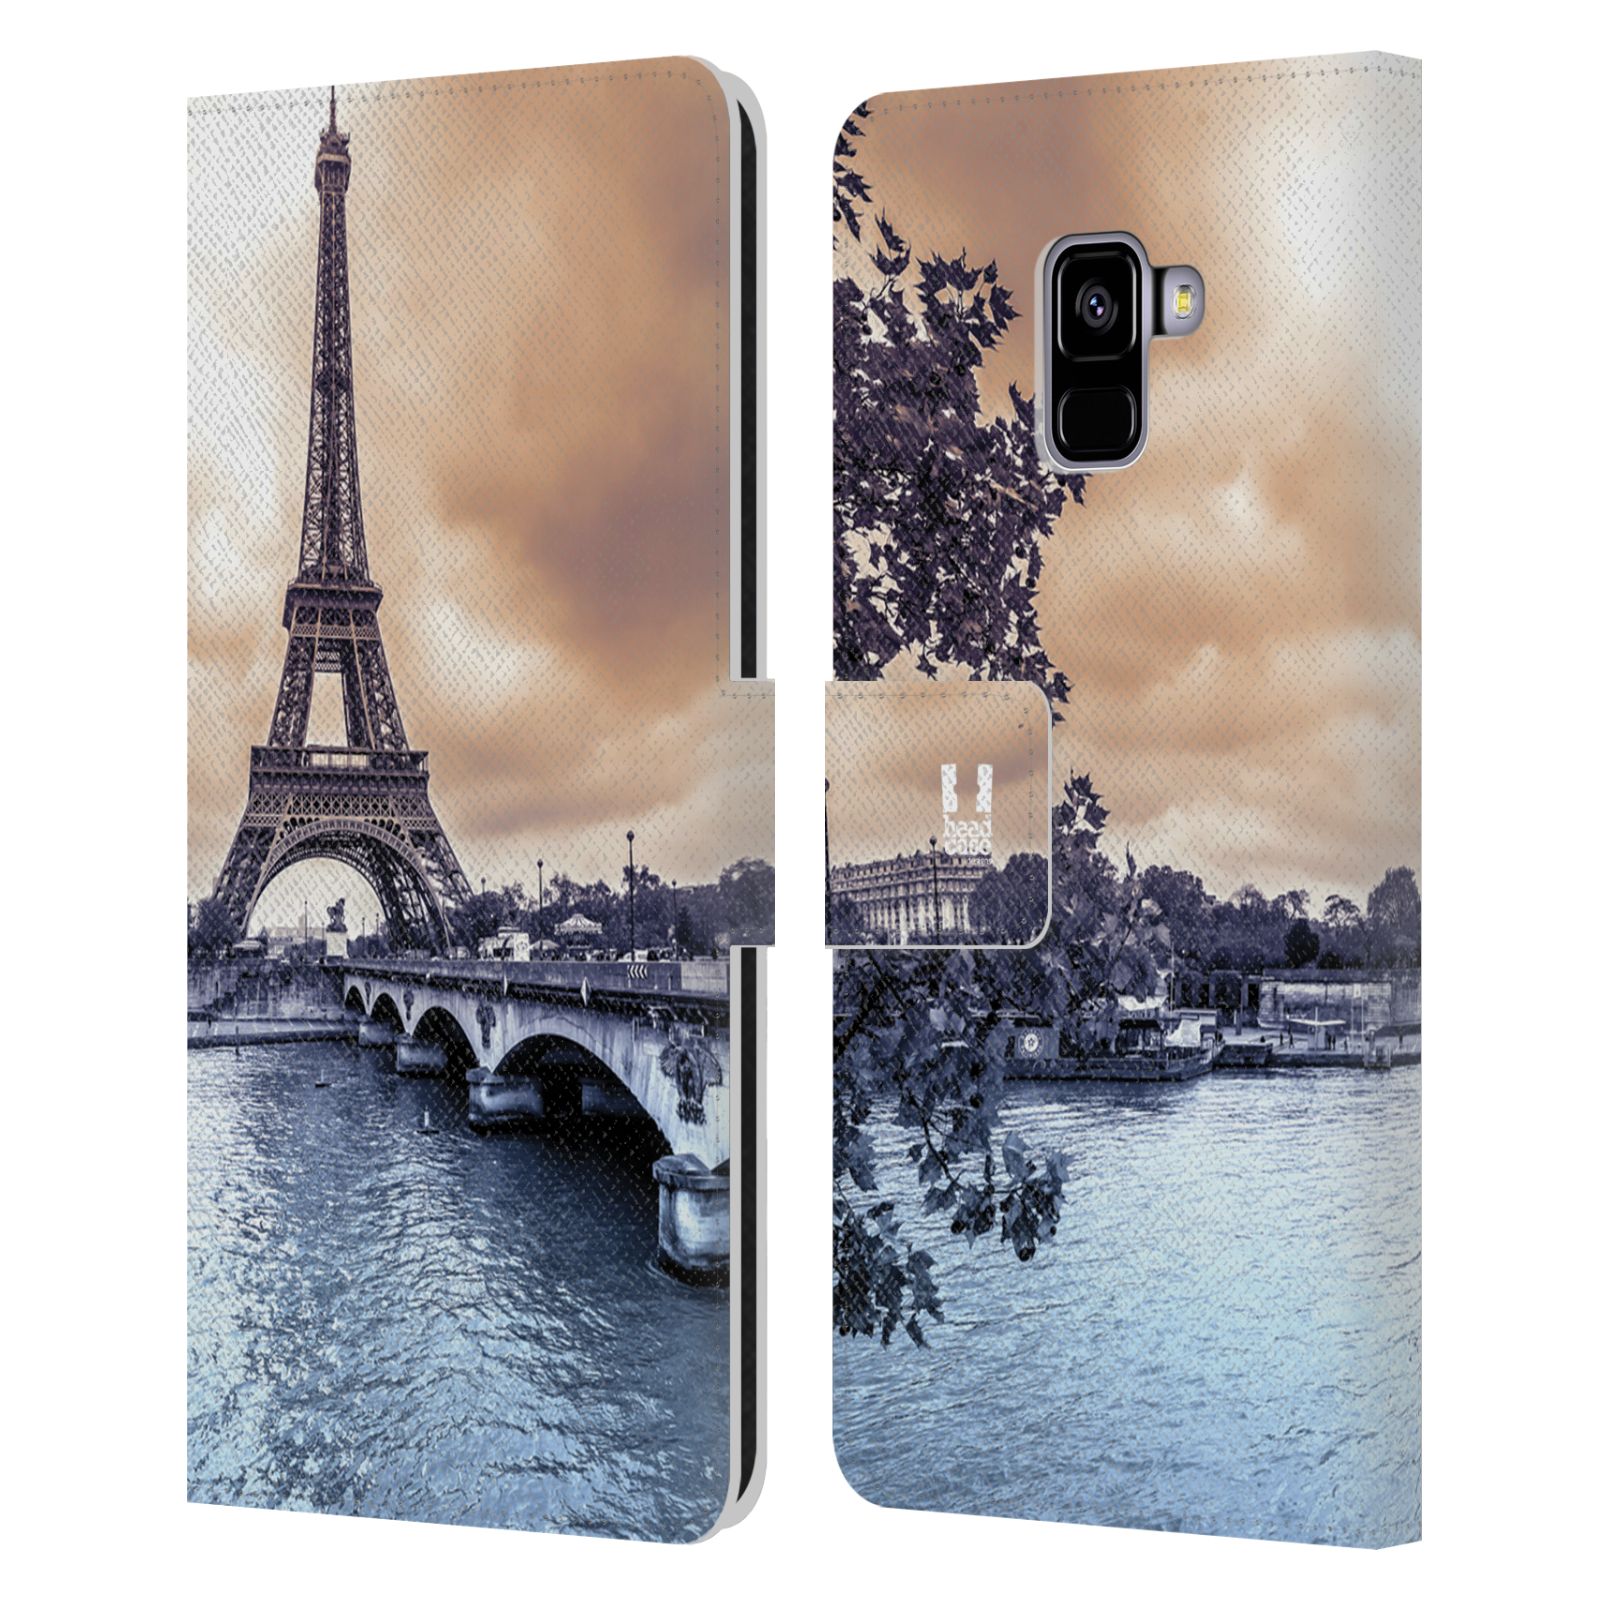 Pouzdro pro mobil Samsung Galaxy A8+ 2018 - Eiffelova věž Paříž - Francie